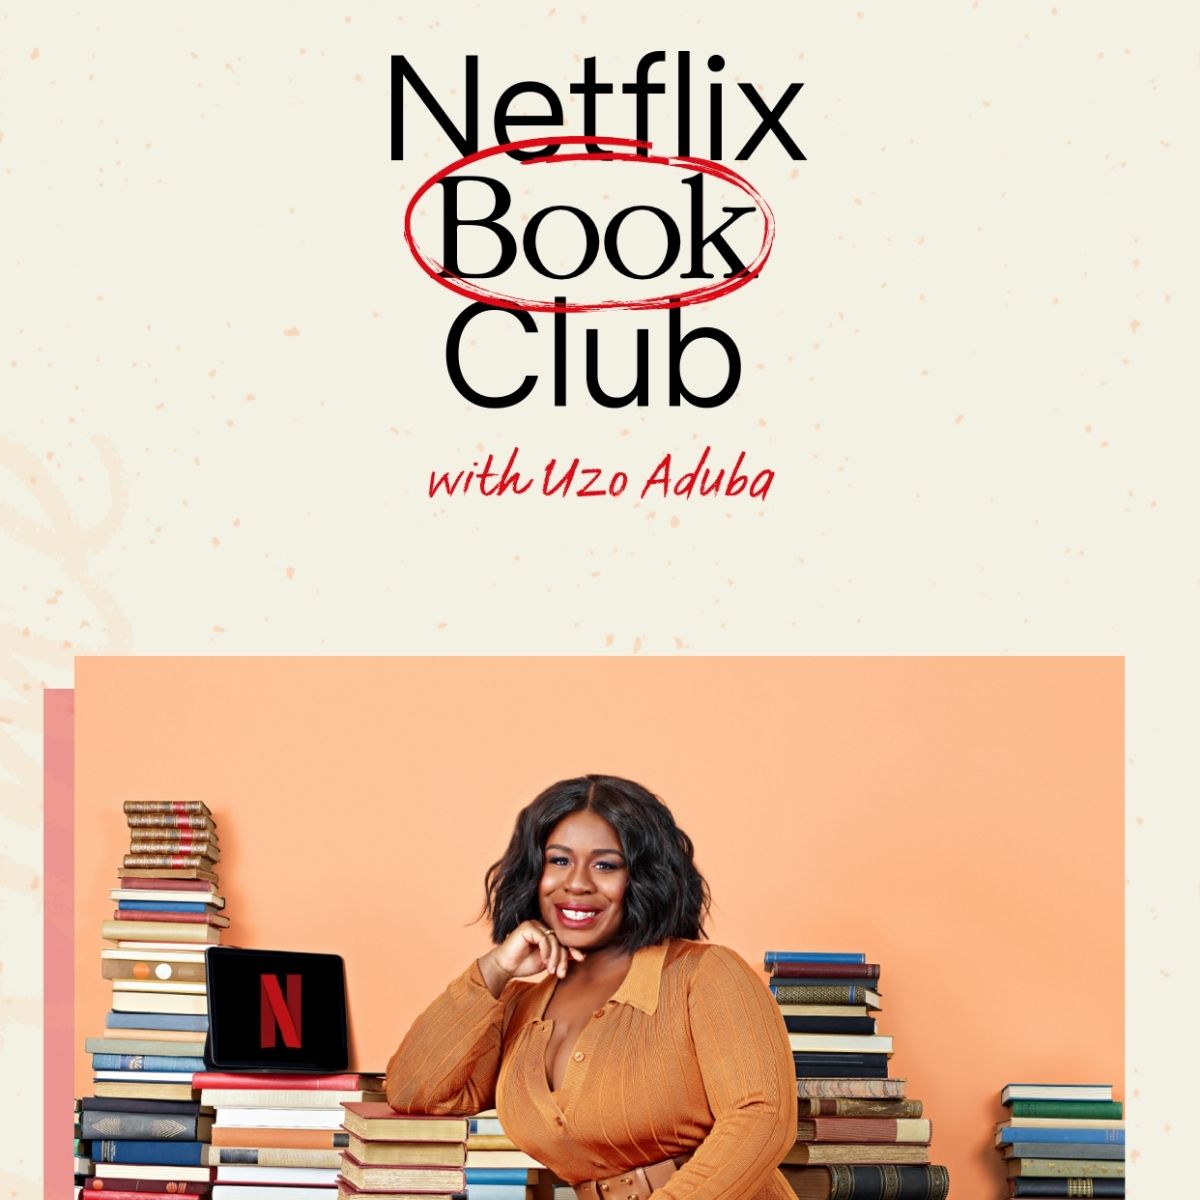 Full List of Netflix Book Club Books